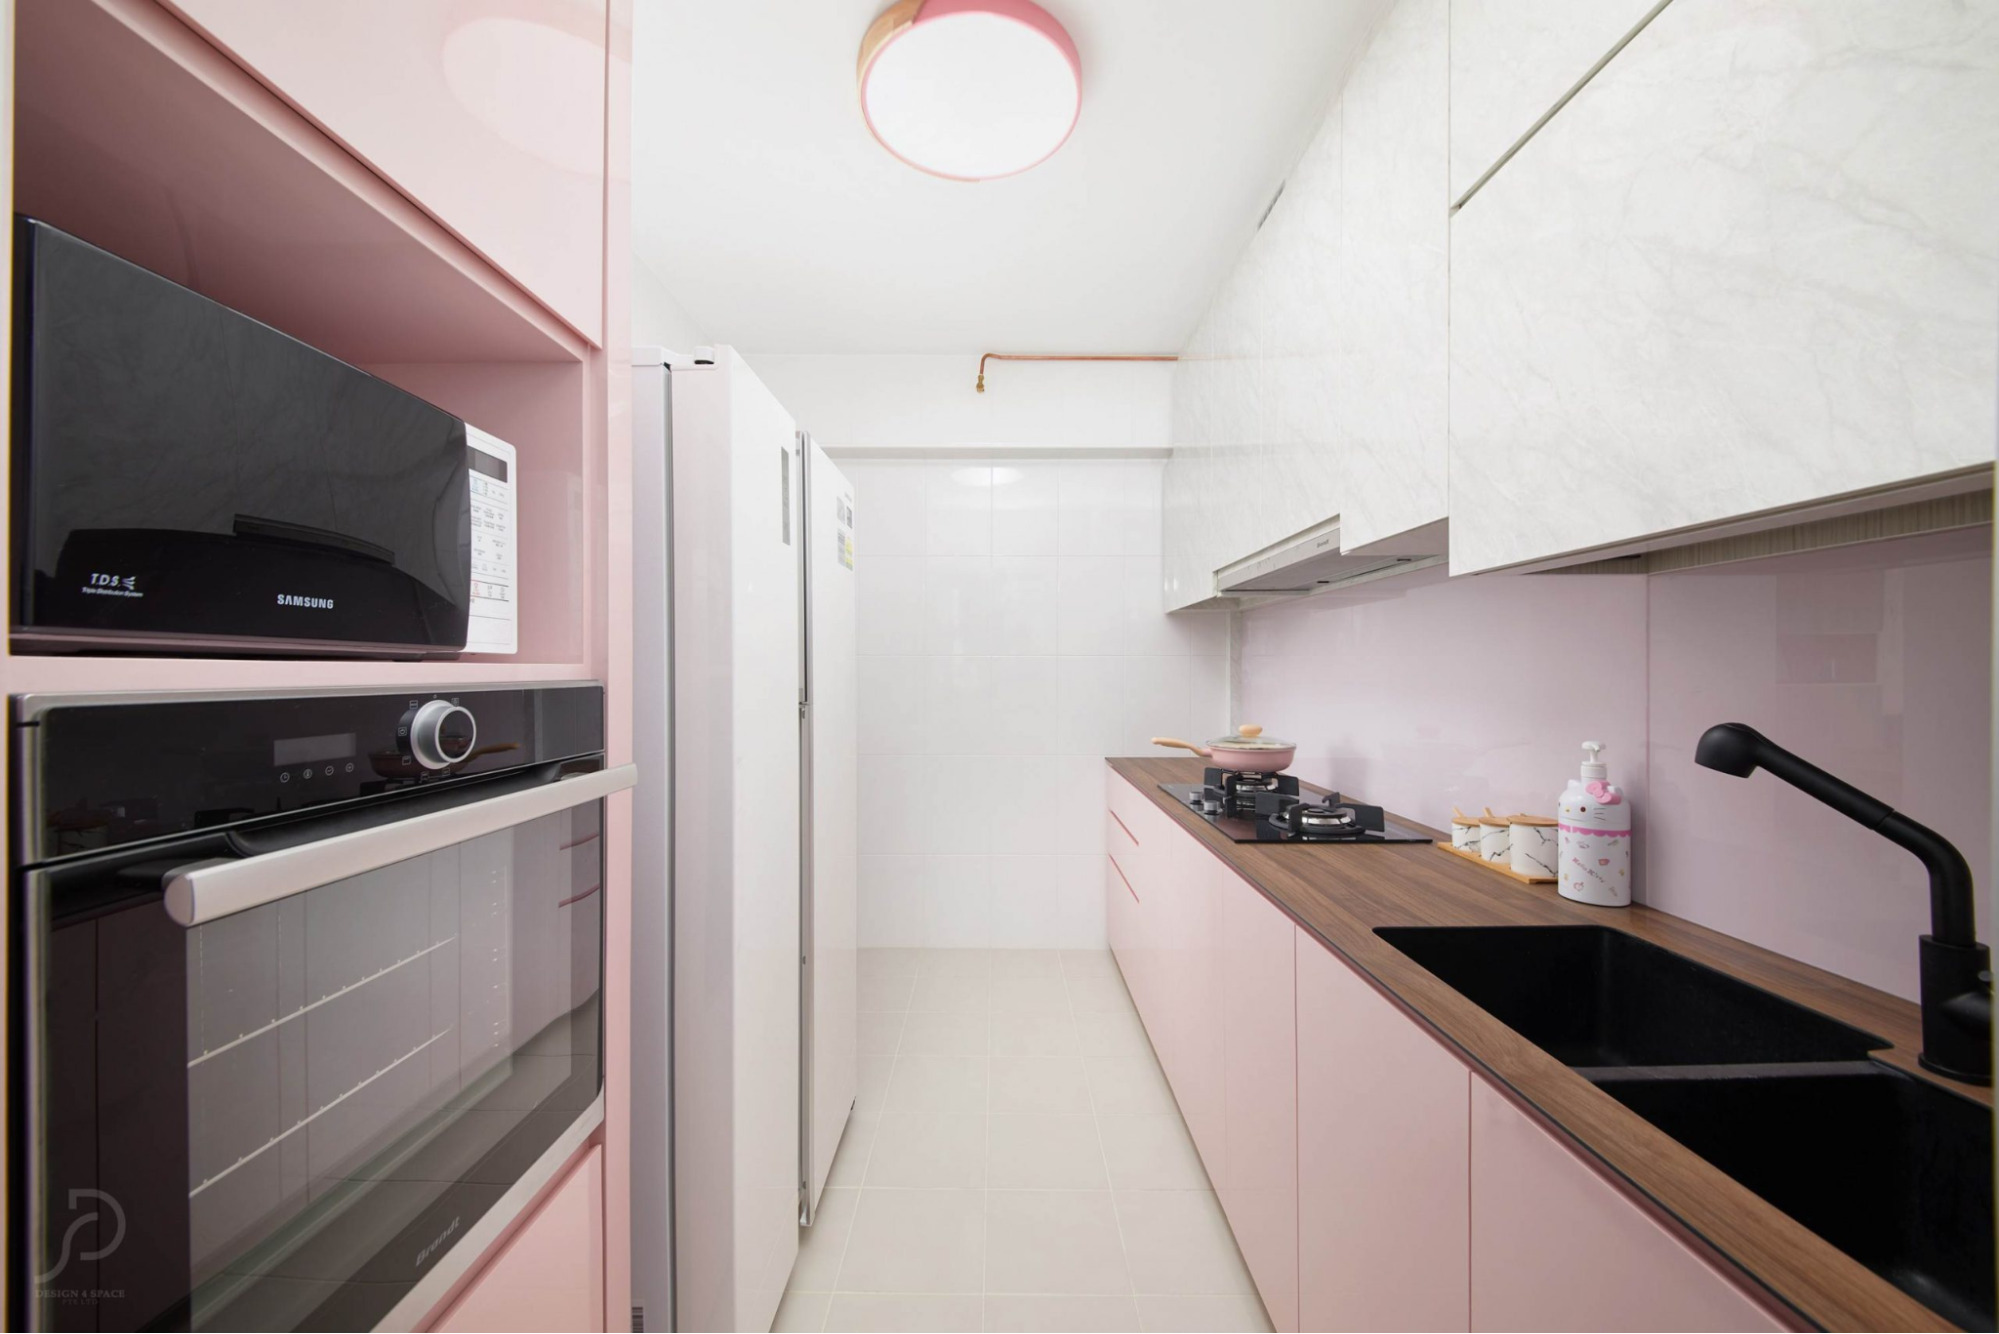 gxs flexiloan most beautiful home renovations - hello kitty kitchen